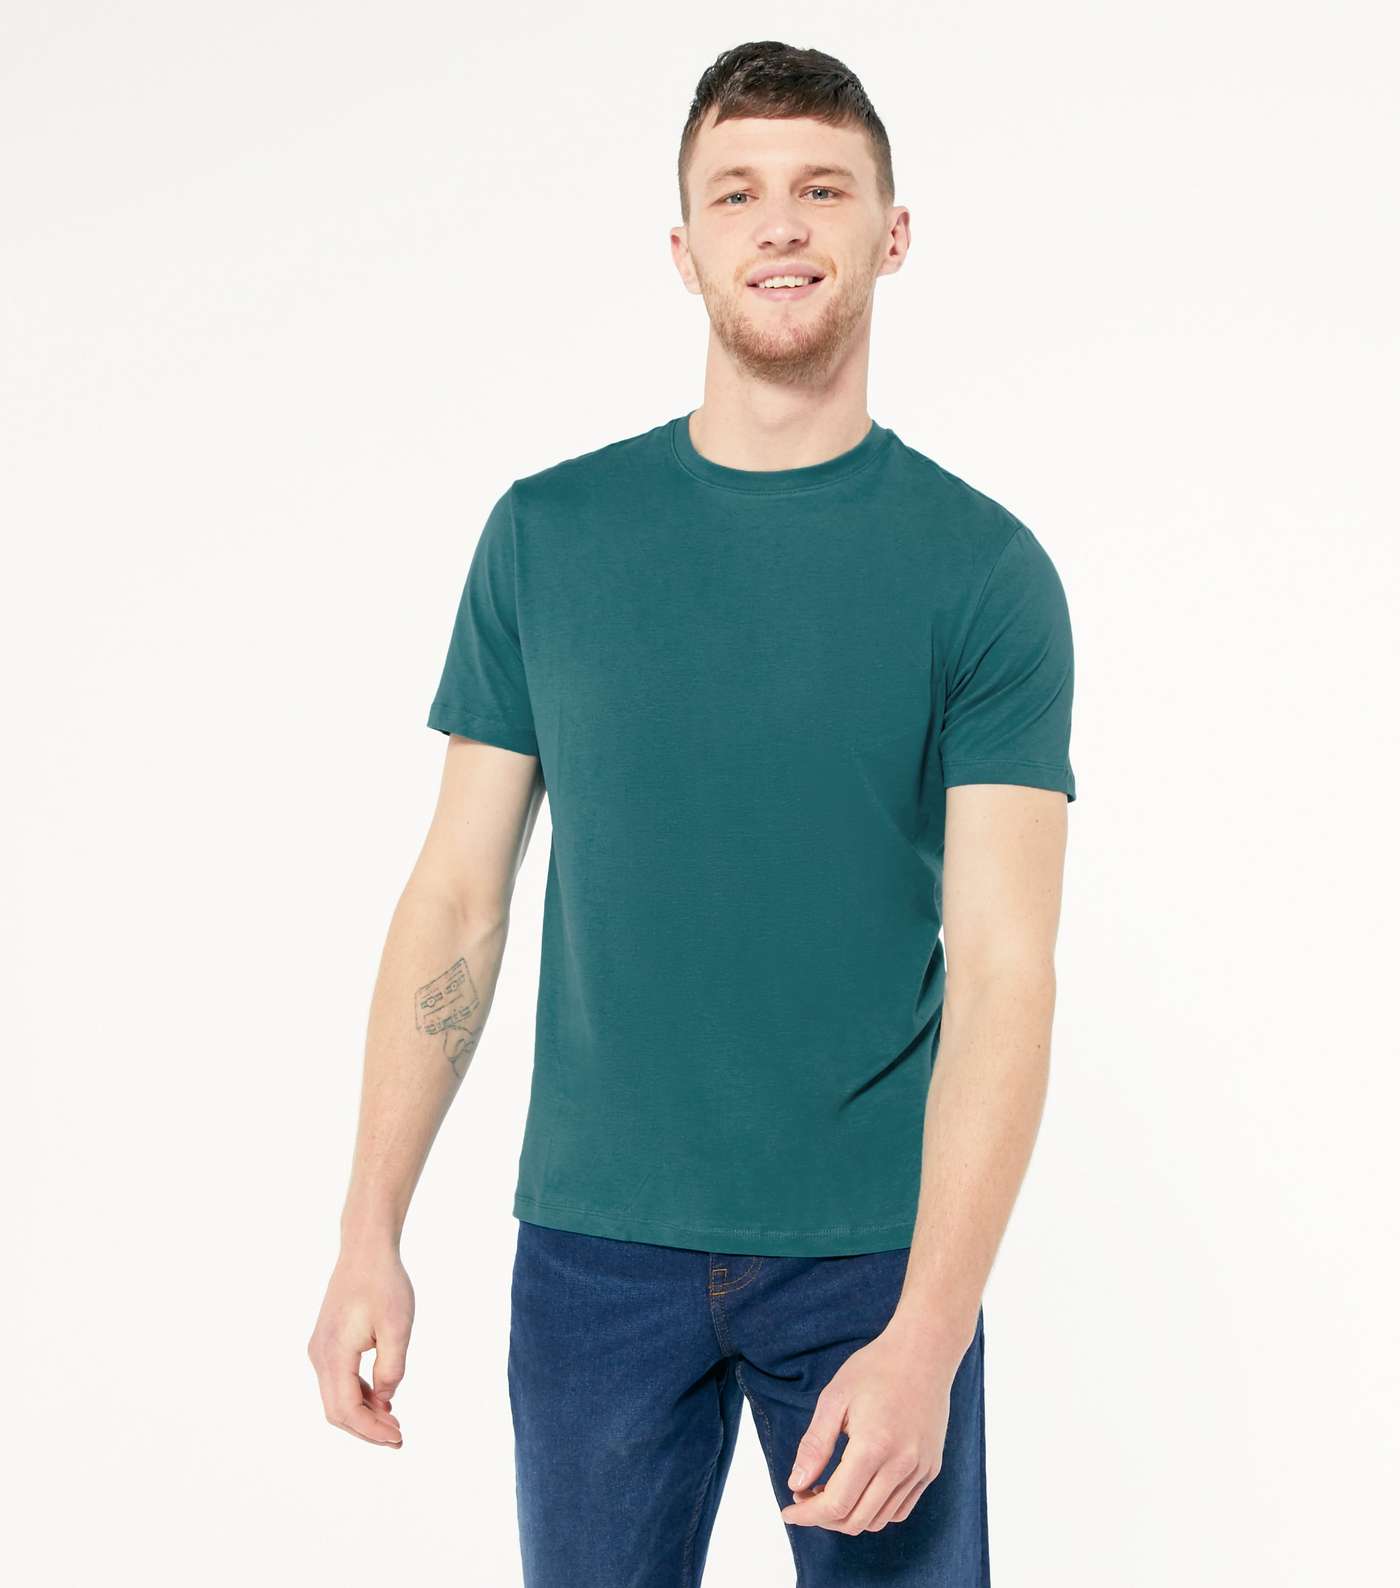 Teal Plain Short Sleeve T-Shirt